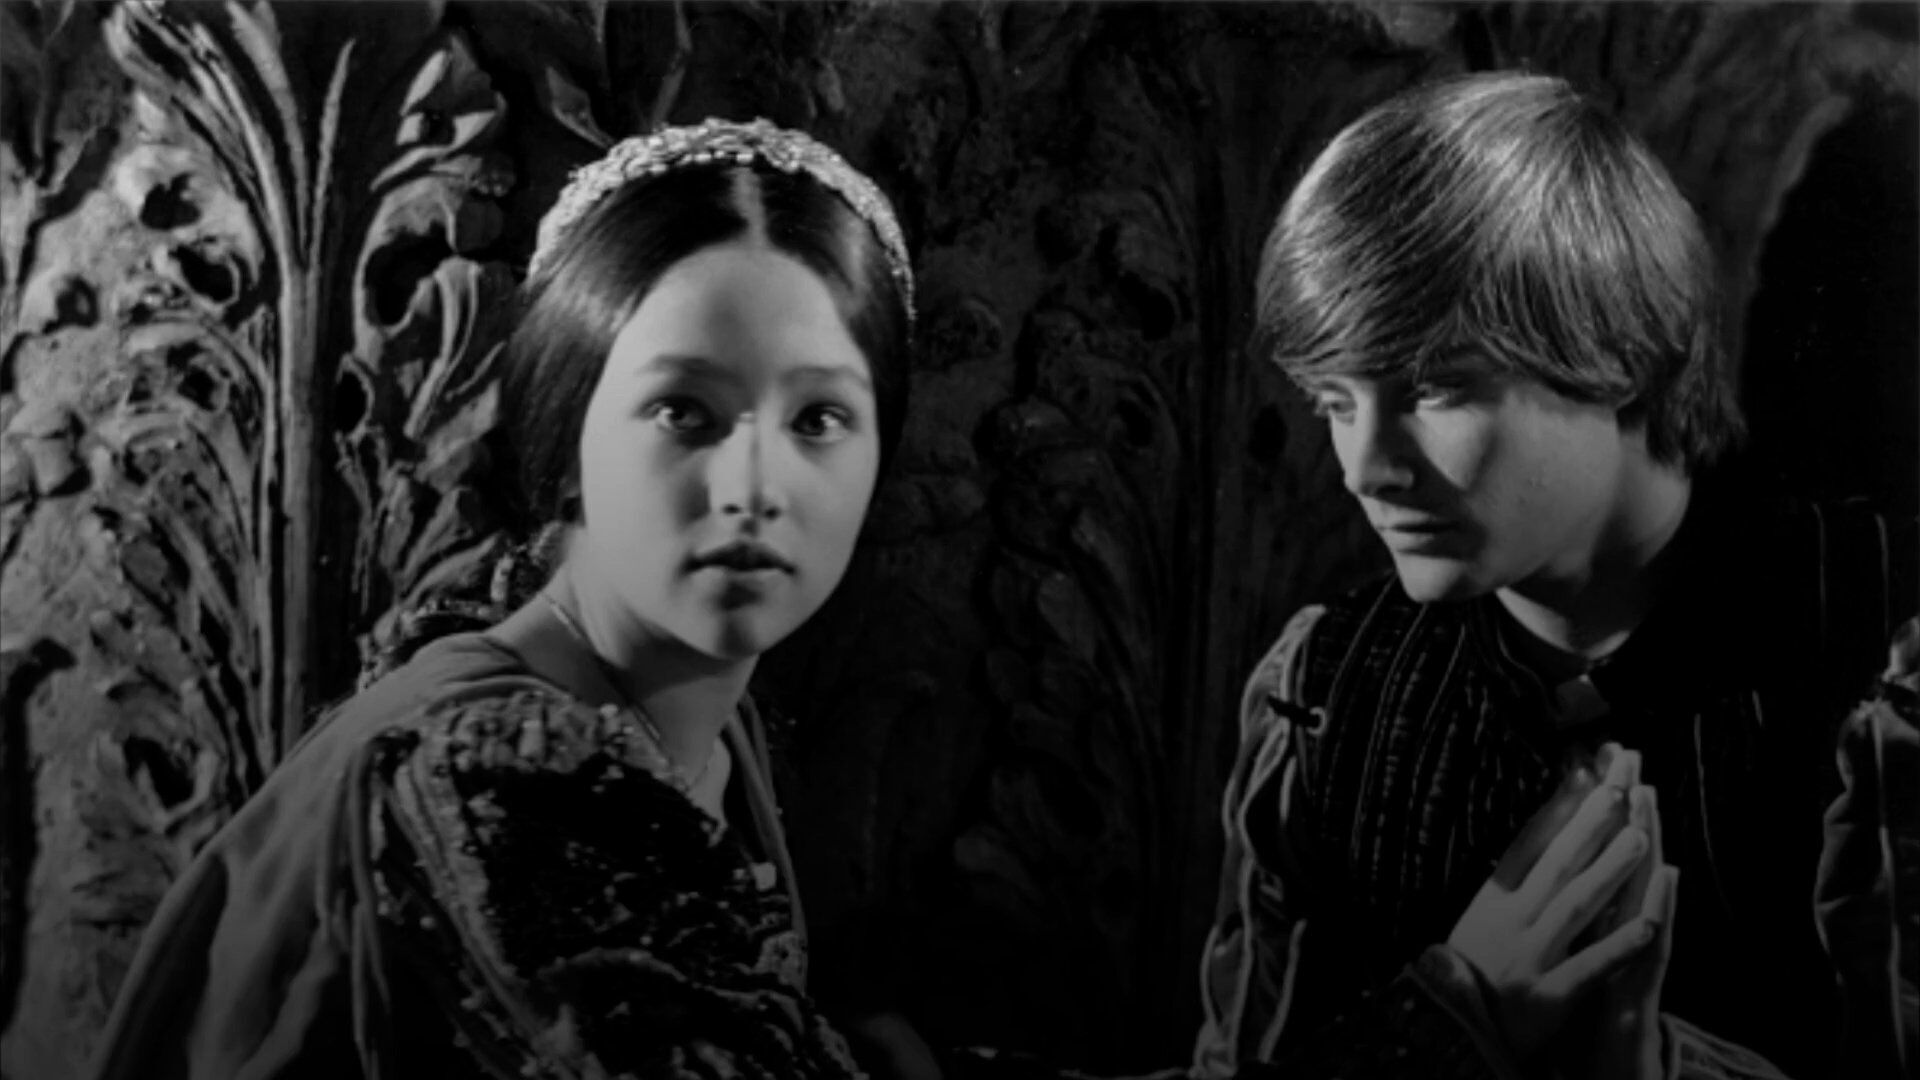 Romeo and Juliet stars sue over 1968 films teen nude scene